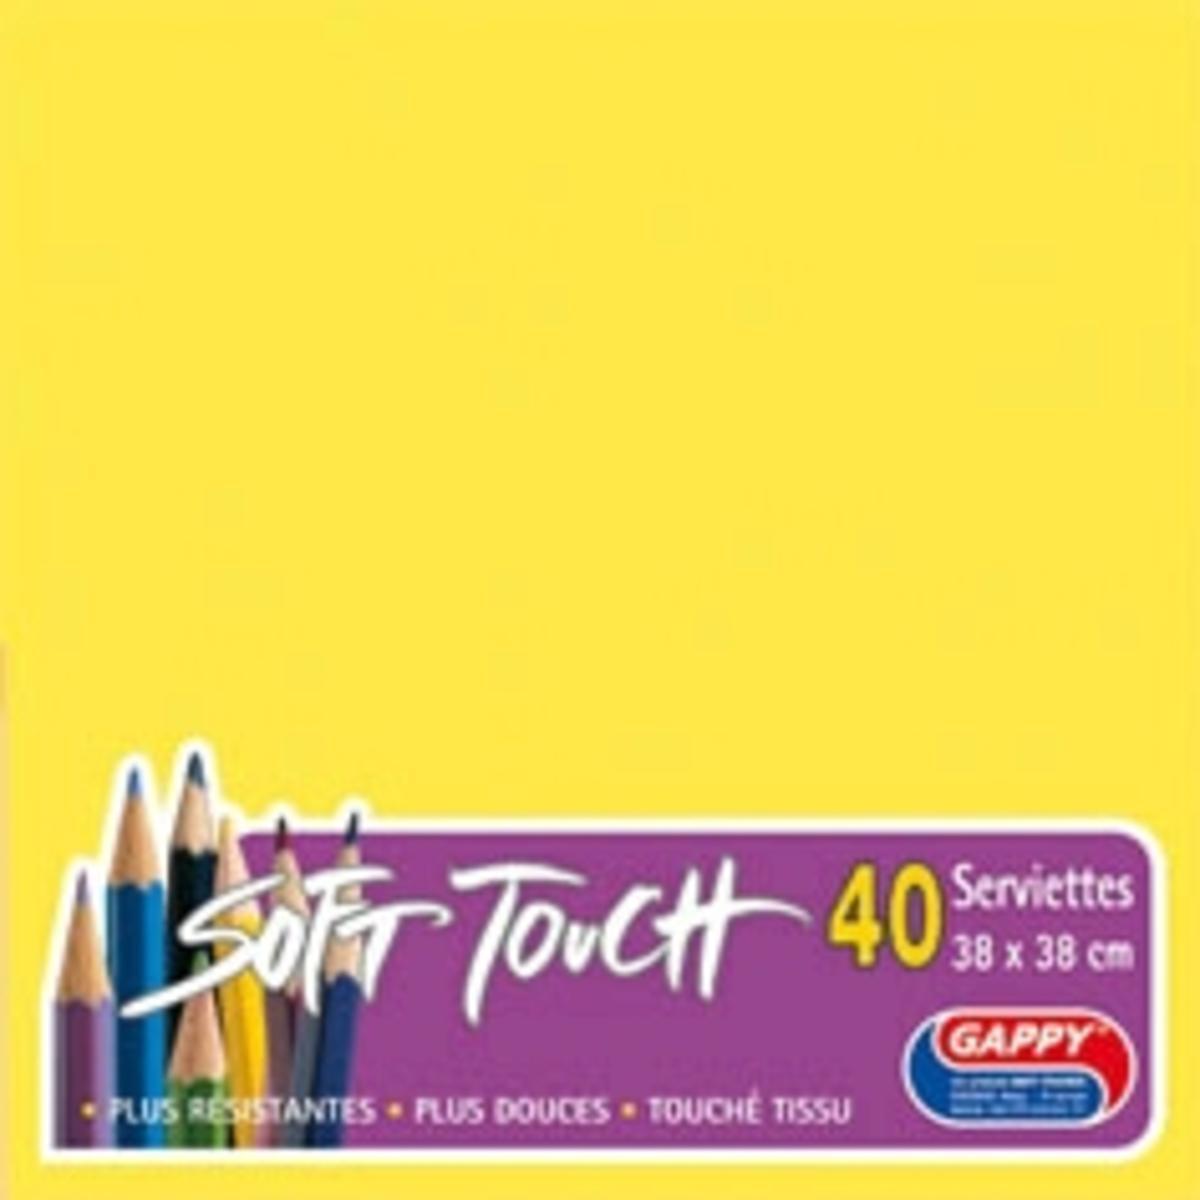 40 serviettes Soft Touch Gappy - 38 x 38 cm - Jaune